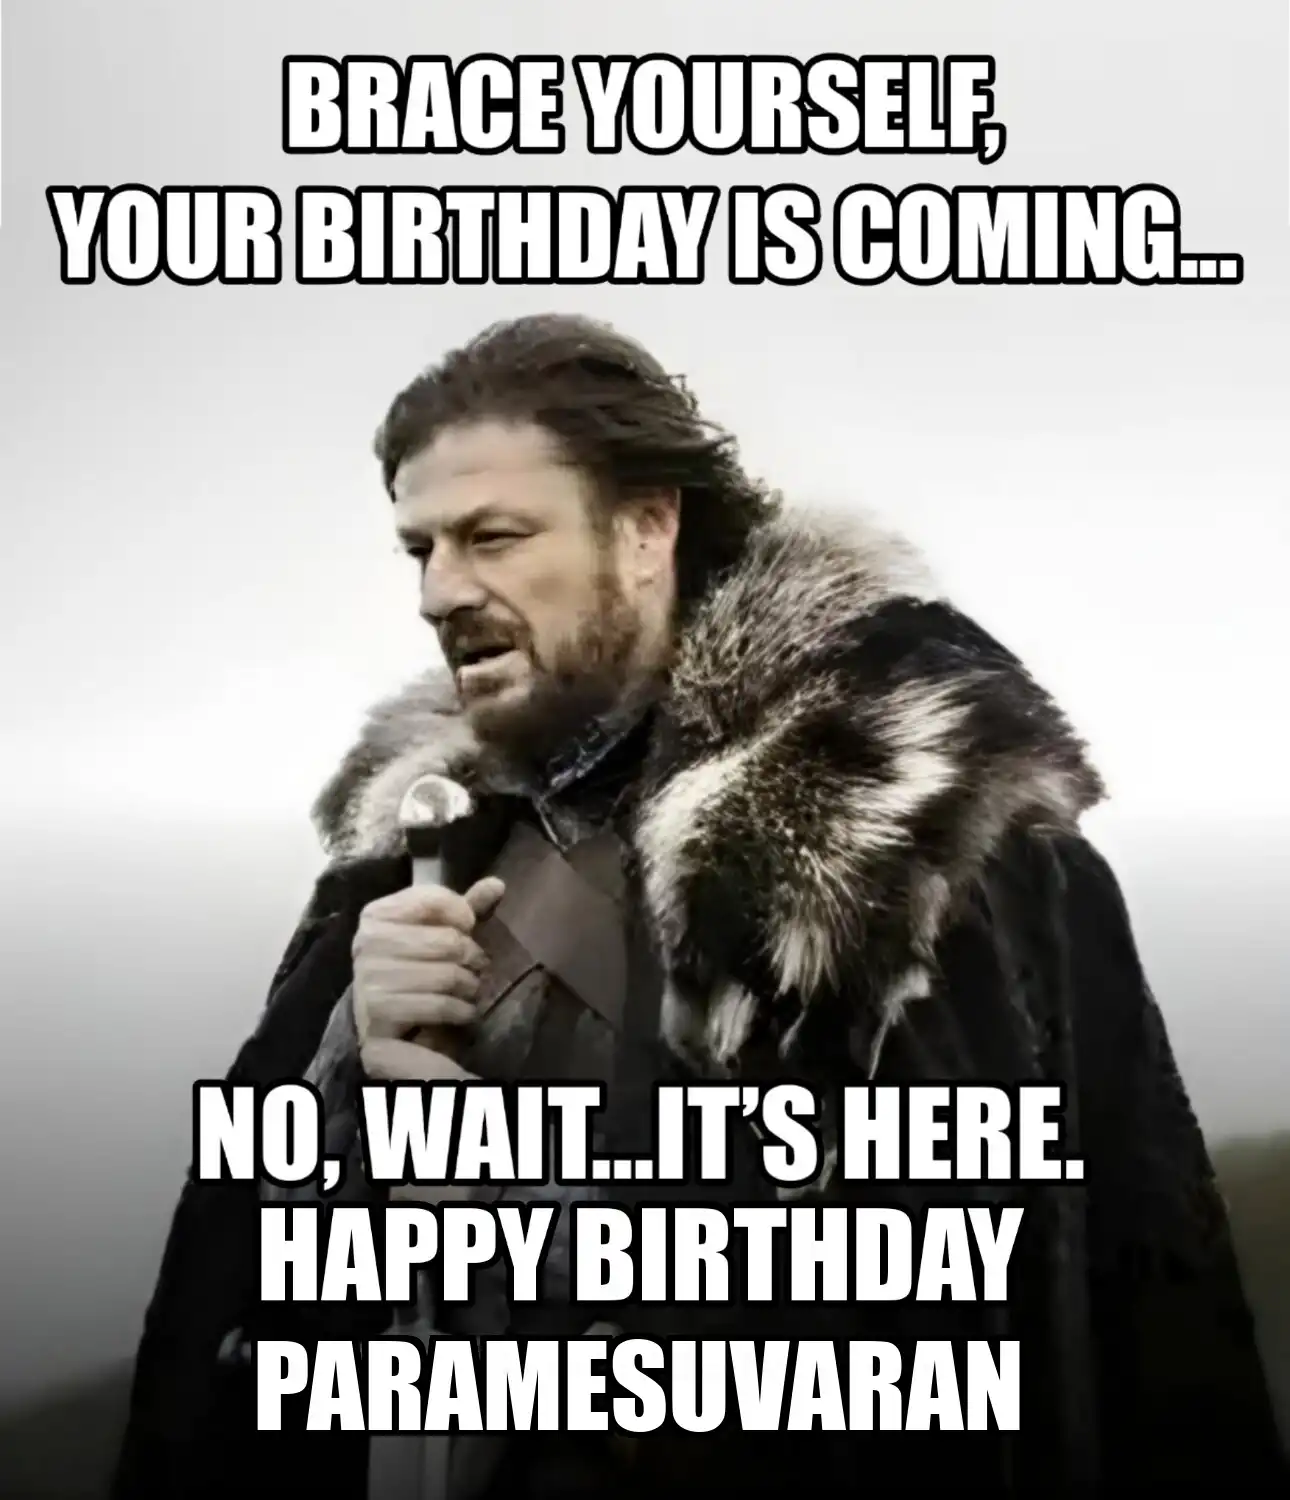 Happy Birthday Paramesuvaran Brace Yourself Your Birthday Is Coming Meme